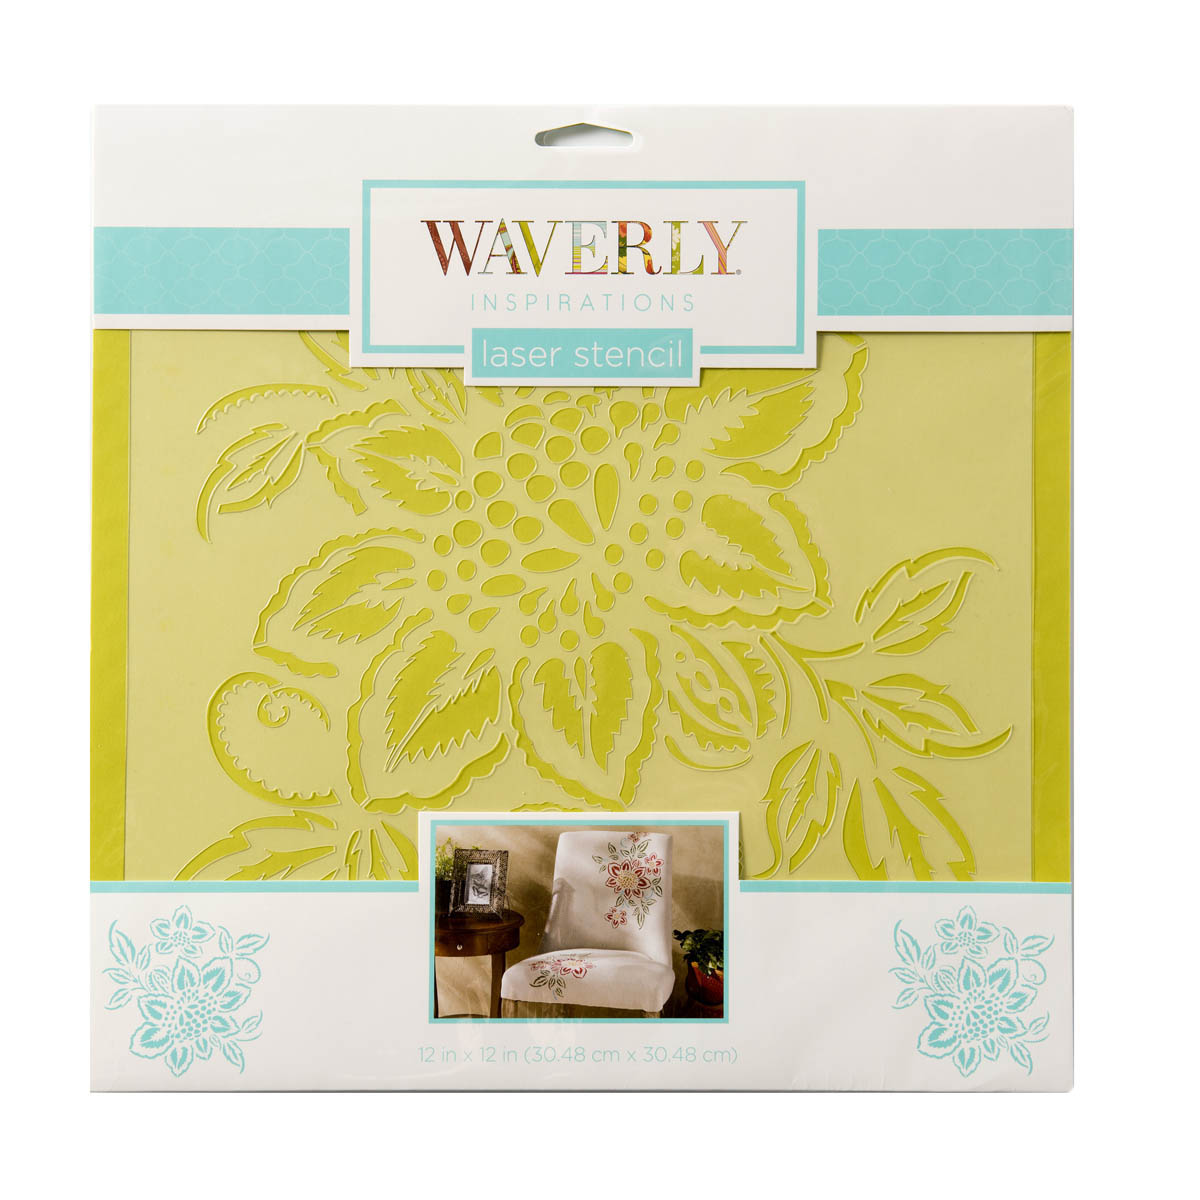 Waverly ® Inspirations Laser Stencils - Décor - Floral, 12